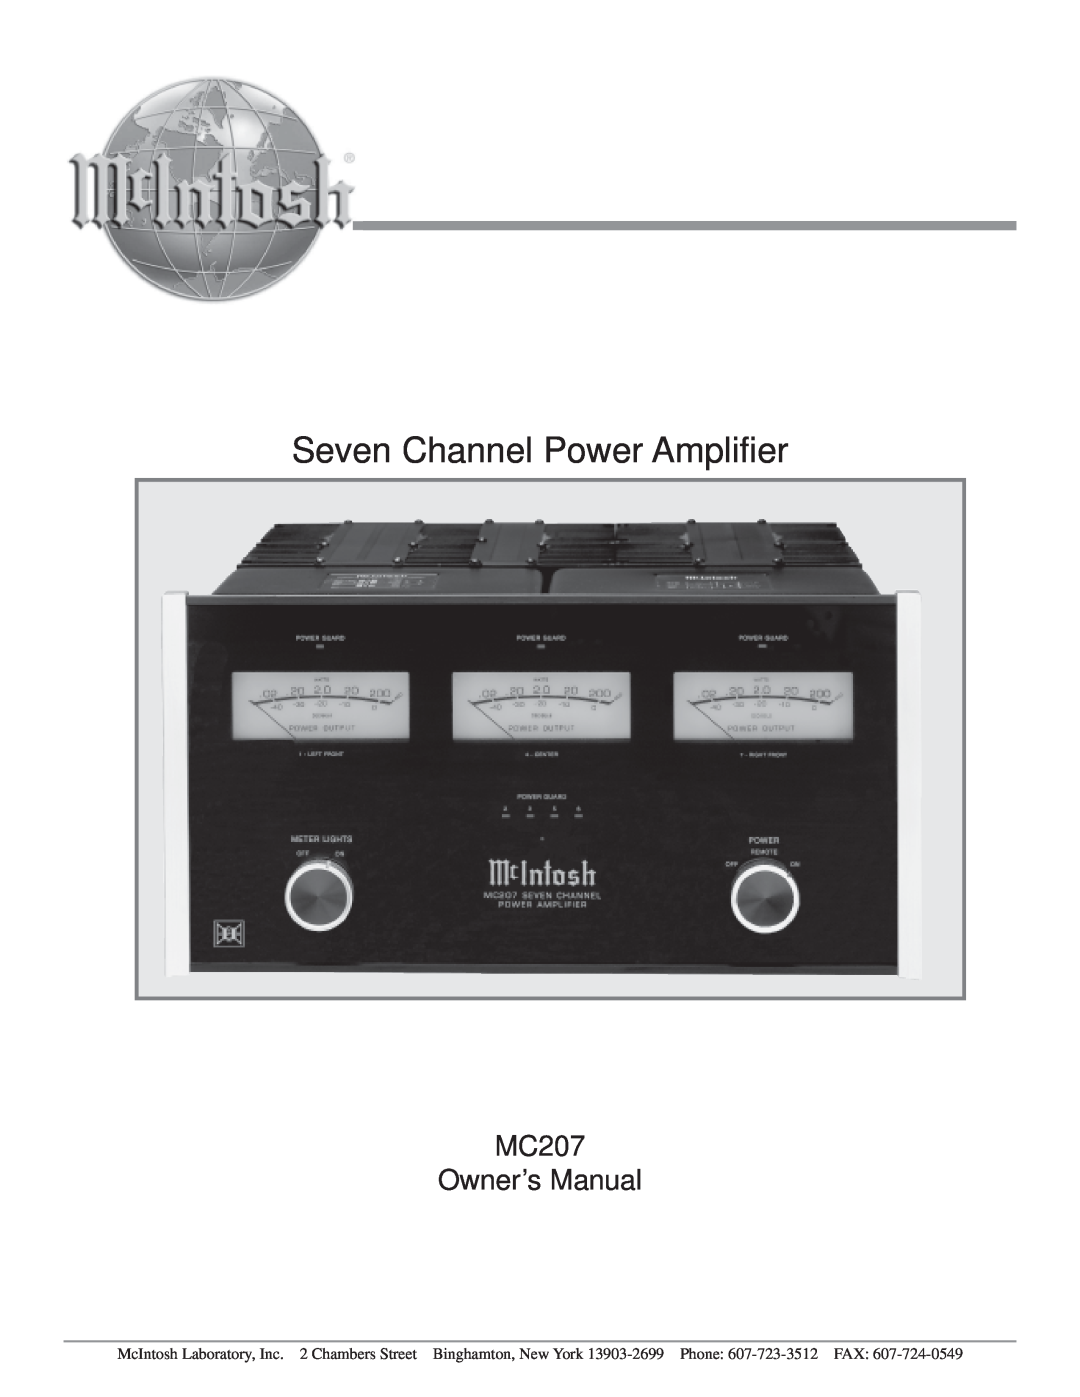 McIntosh MC207 owner manual Seven Channel Power Amplifier 